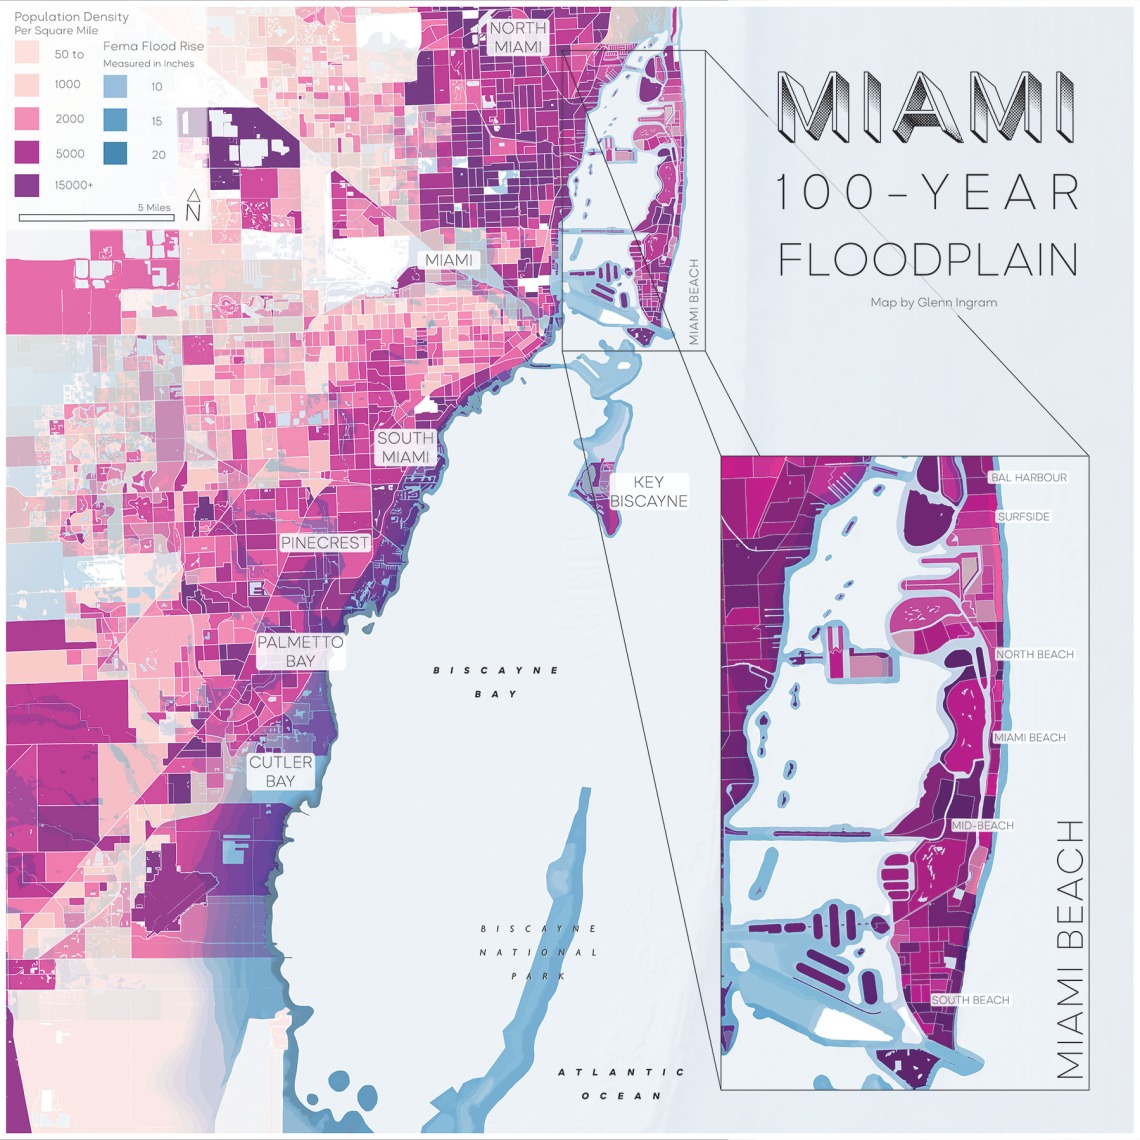 Miami 100-year floodplain map by Glenn Ingram